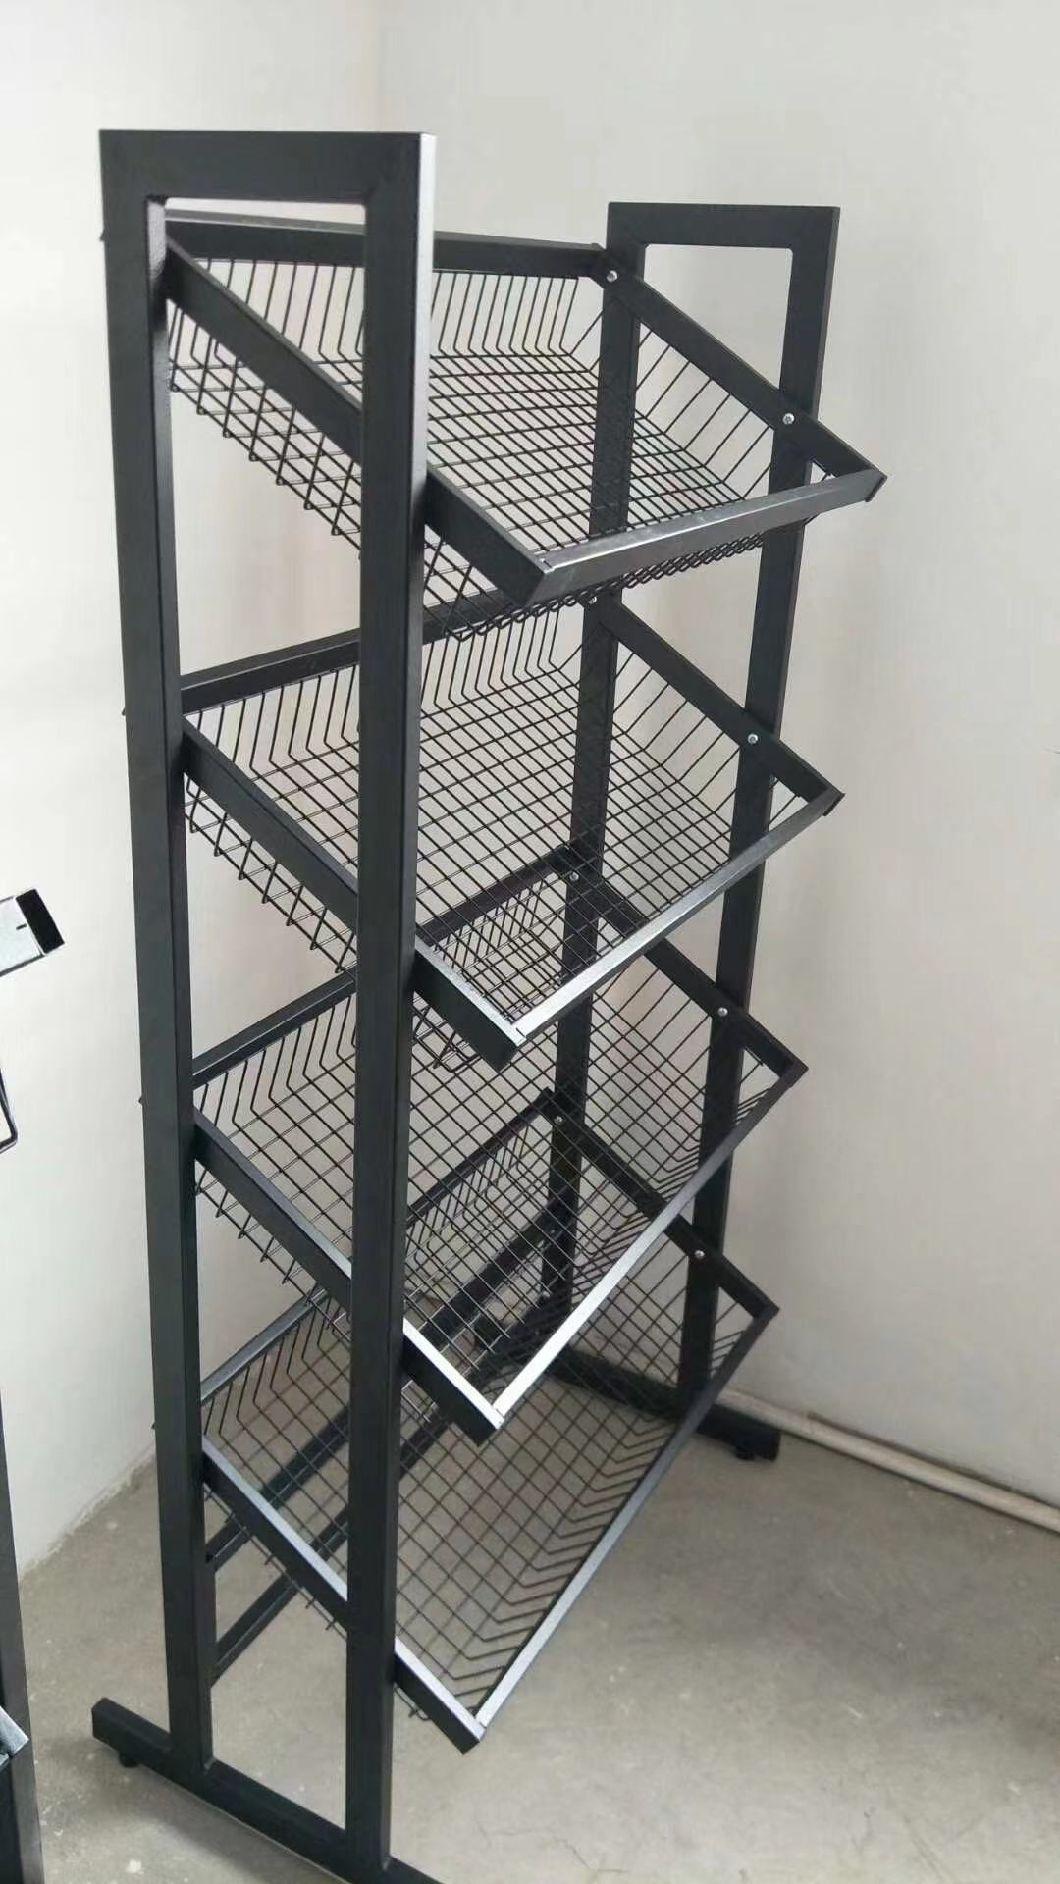 Multifunction Storage Rack with Meshs Shelves